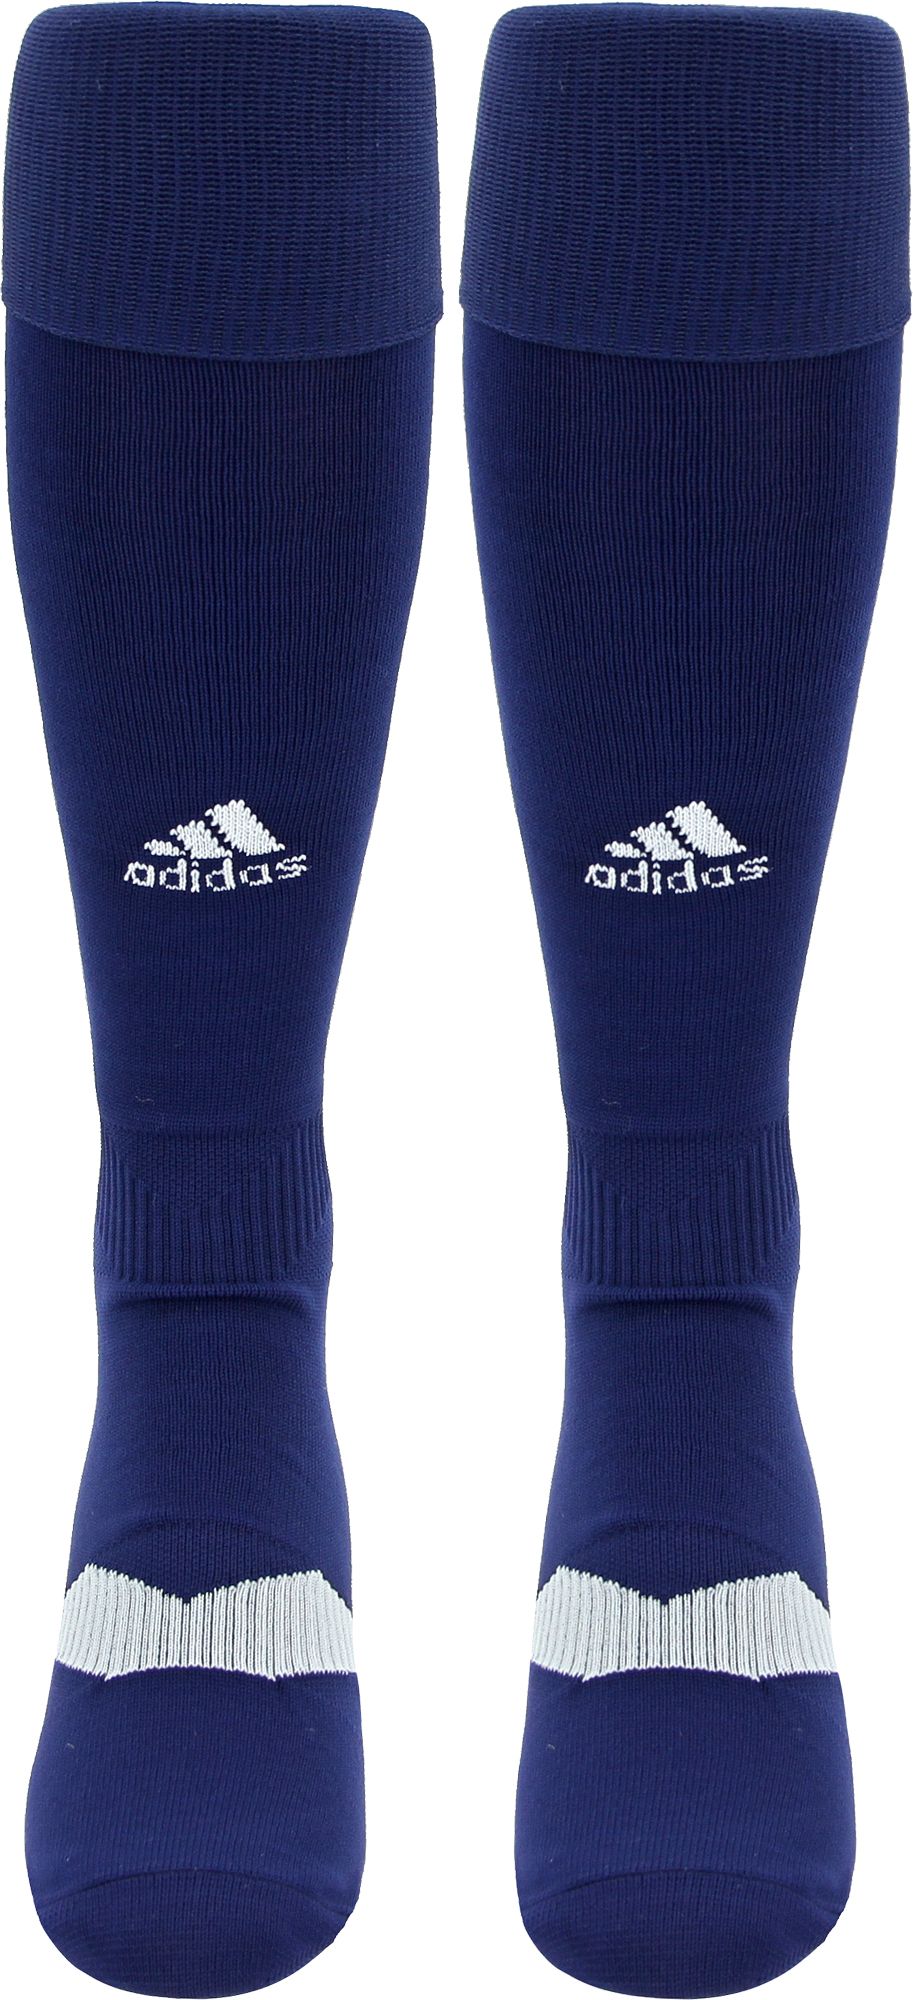 adidas metro iv otc soccer socks